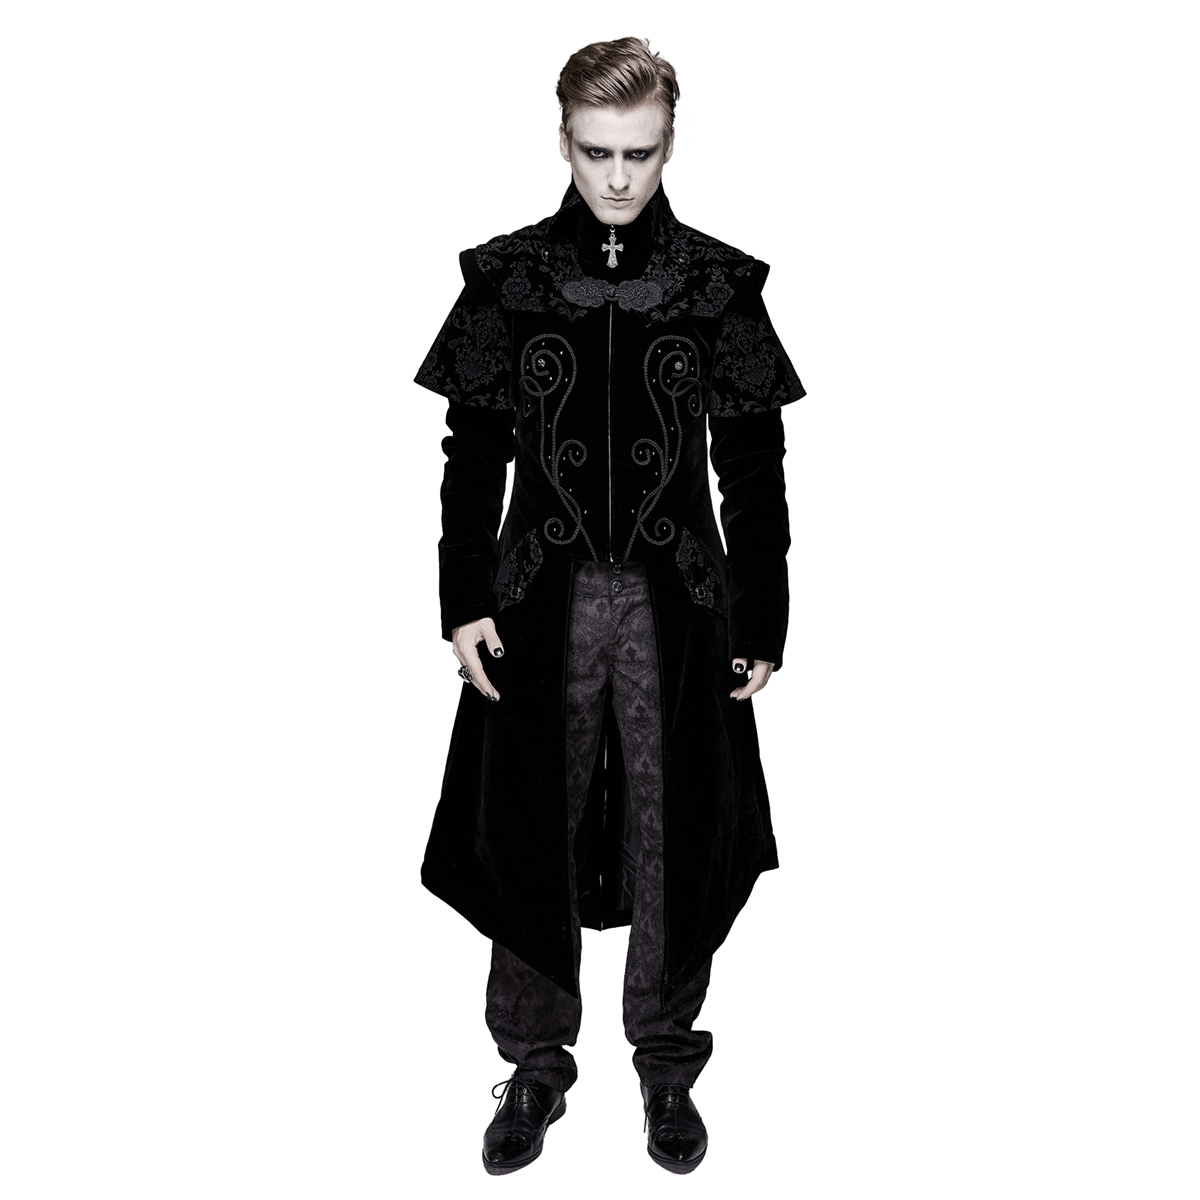 Vintage Black Long Velvet Coat For Men / Gothic Coat with Zipper Front With Cross Accents - HARD'N'HEAVY